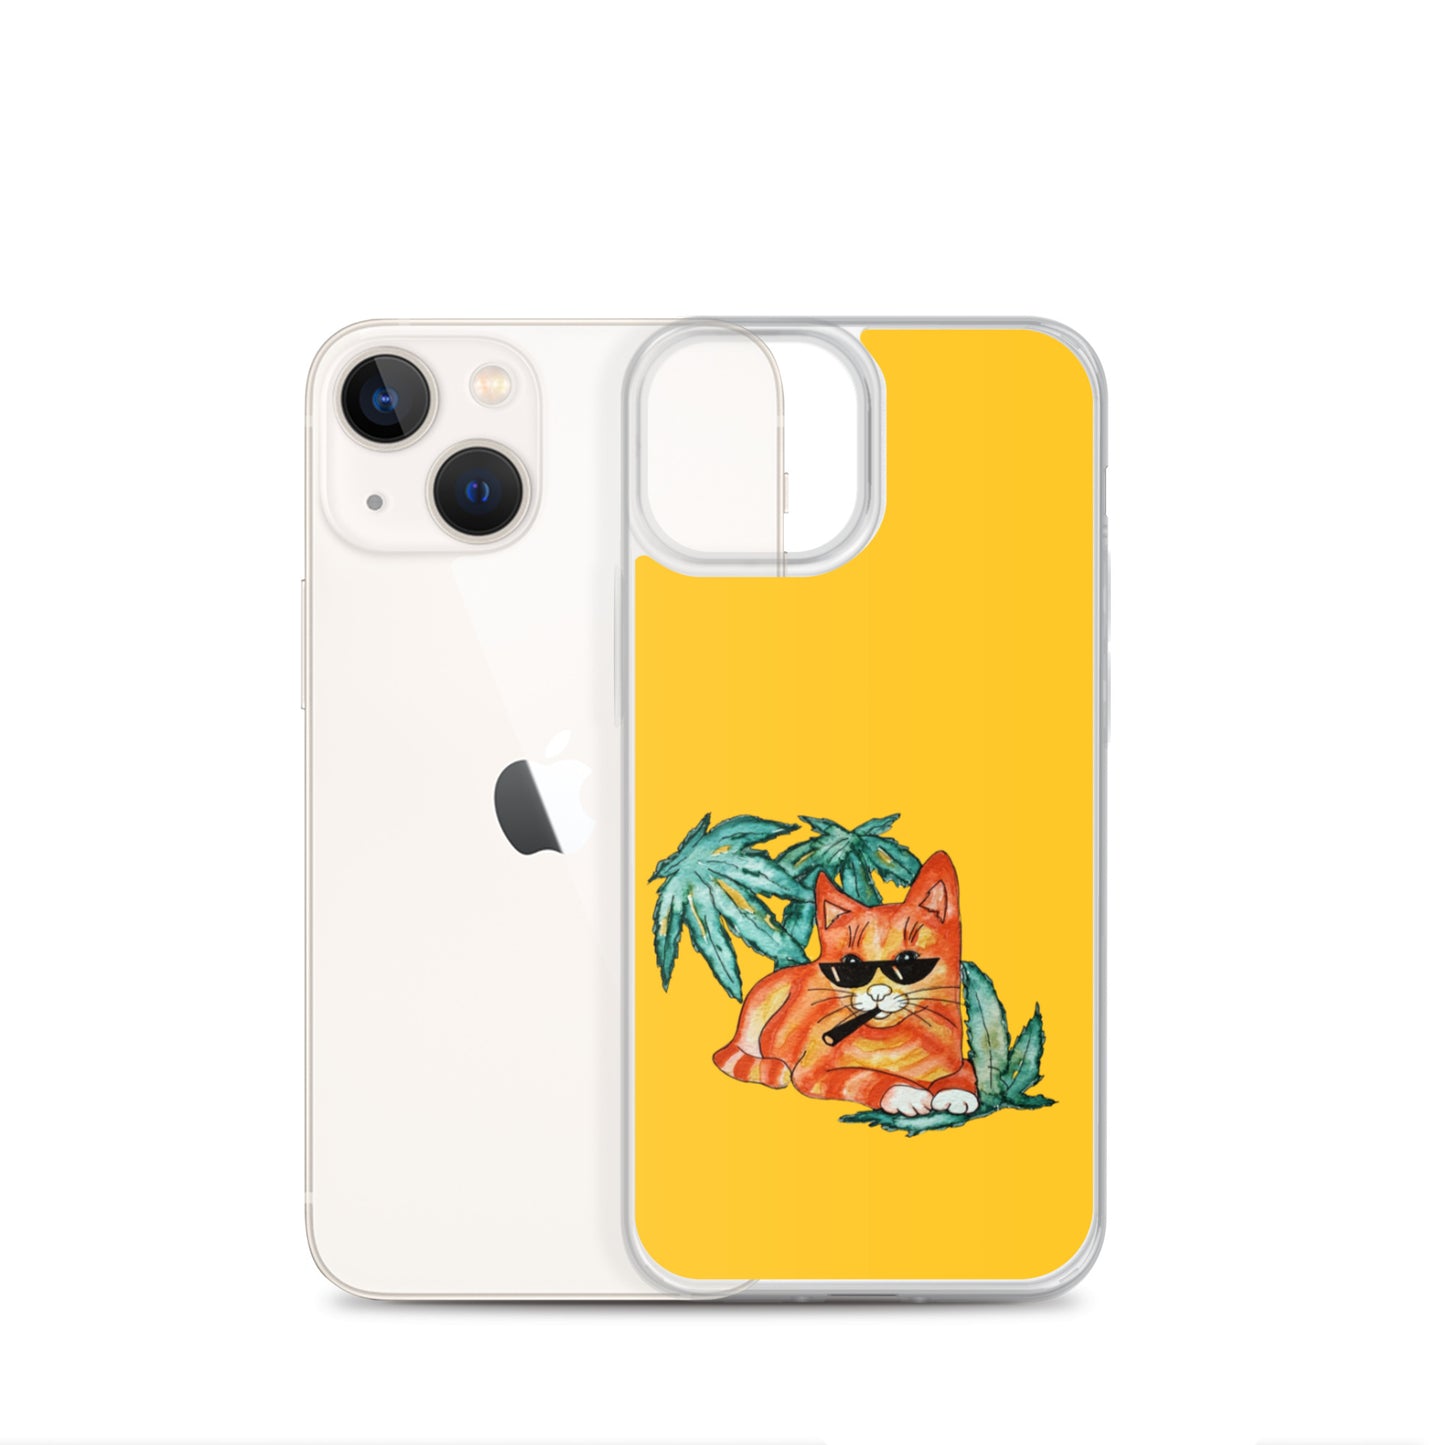 Cool Ginger Cat iPhone Case - Art Love Decor